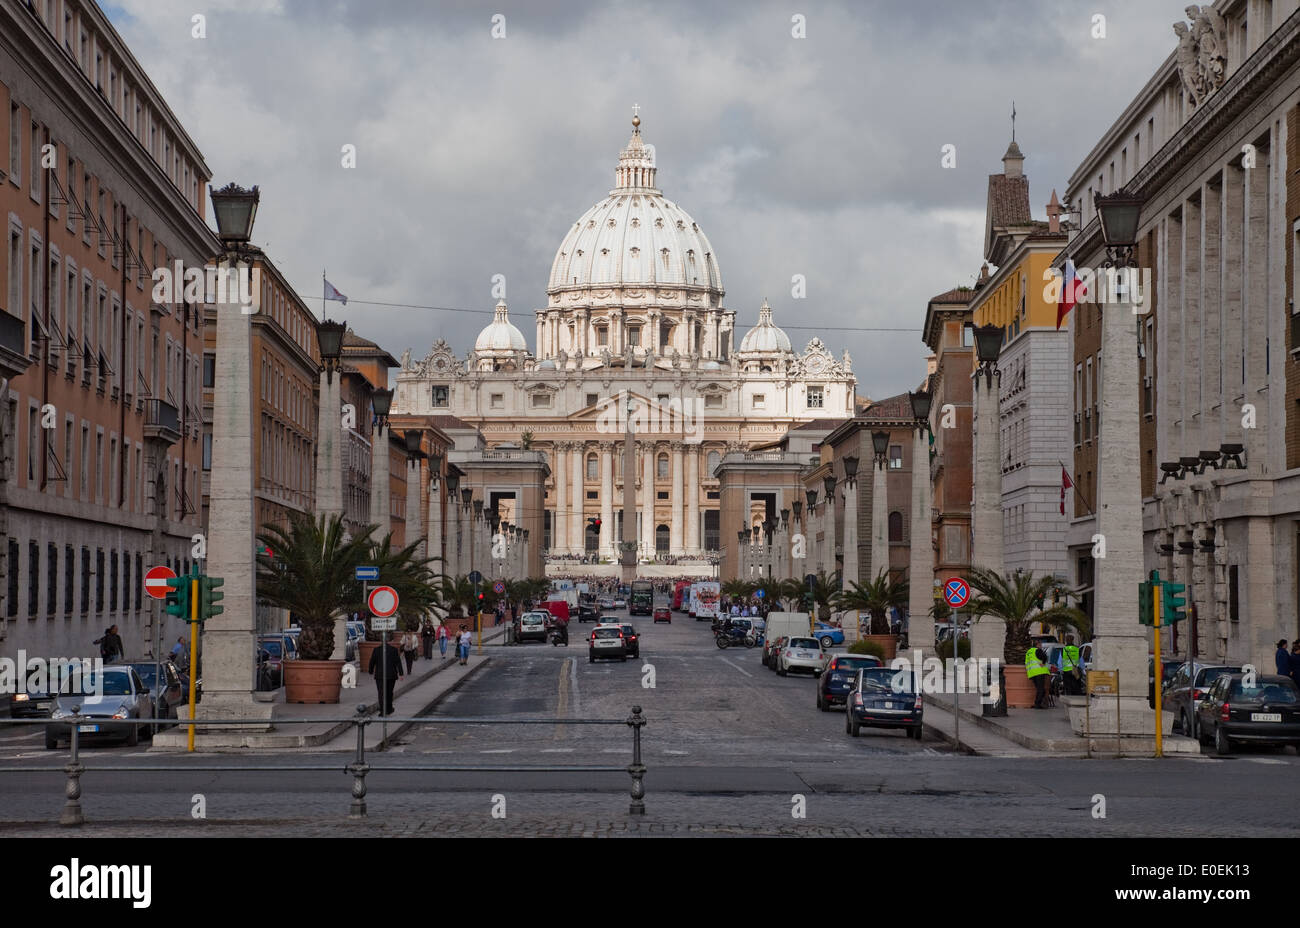 Petersdom, Vatikan - Petersdom, Vatikan Stockfoto